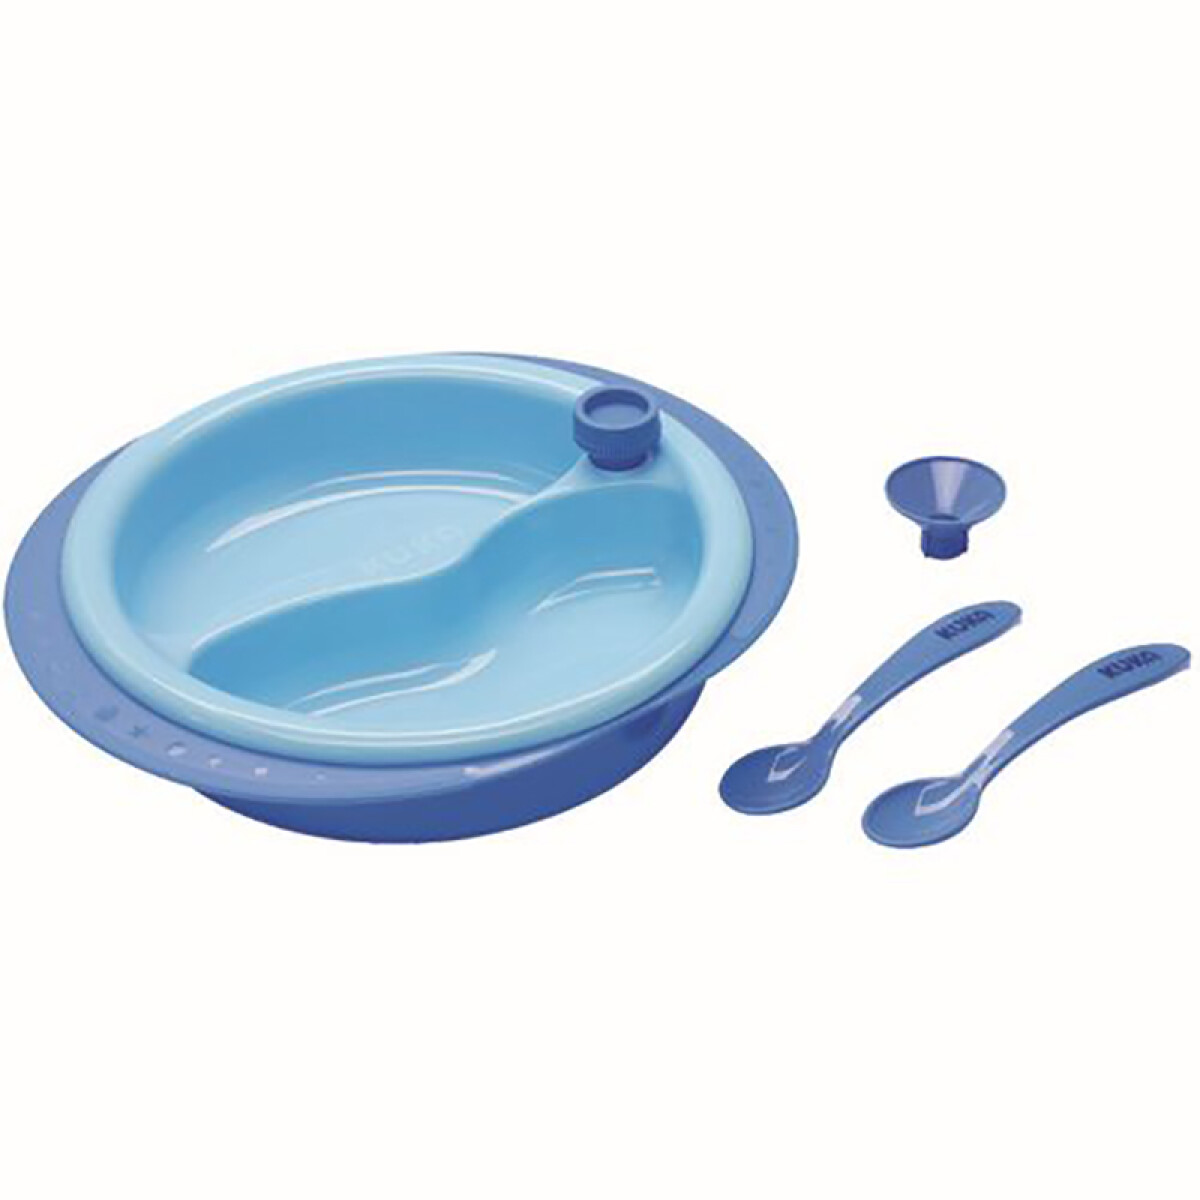 Kuka set de plato térmico y cucharas - Azul 